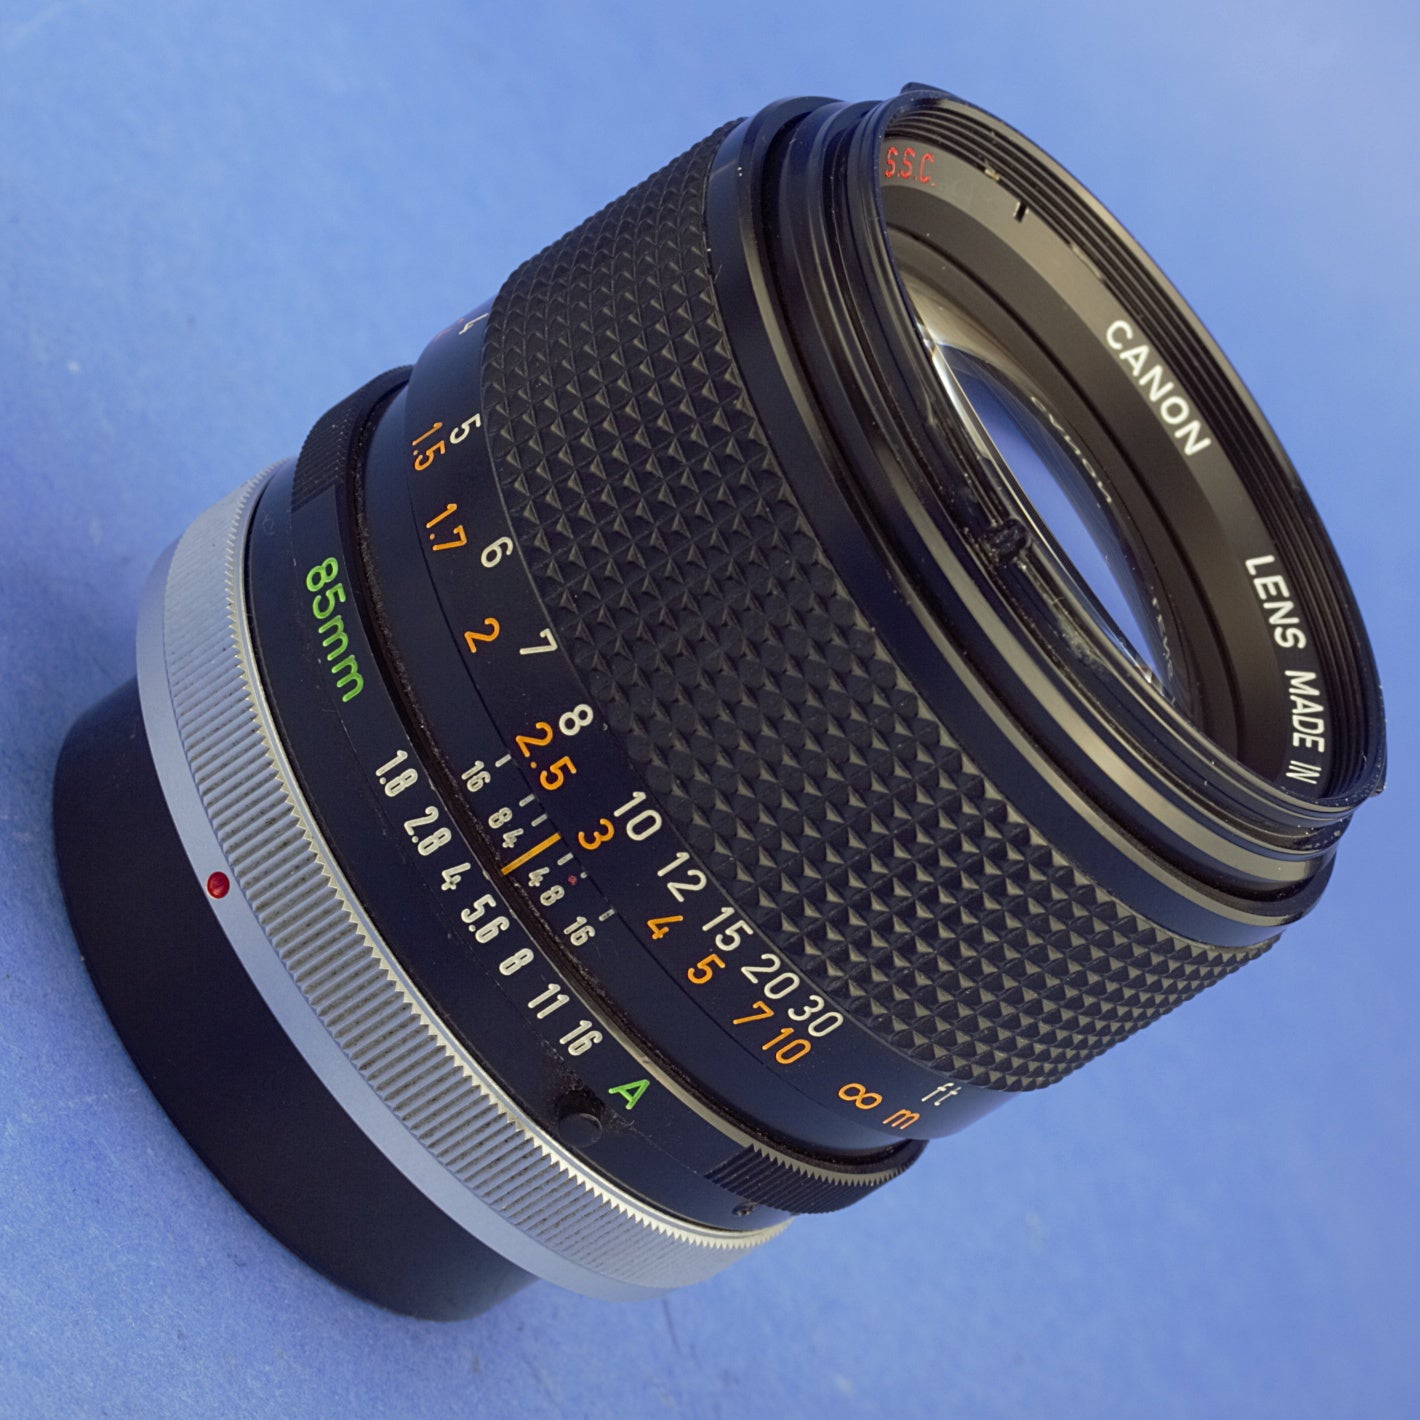 Canon FD 85mm 1.8 S.S.C. Lens